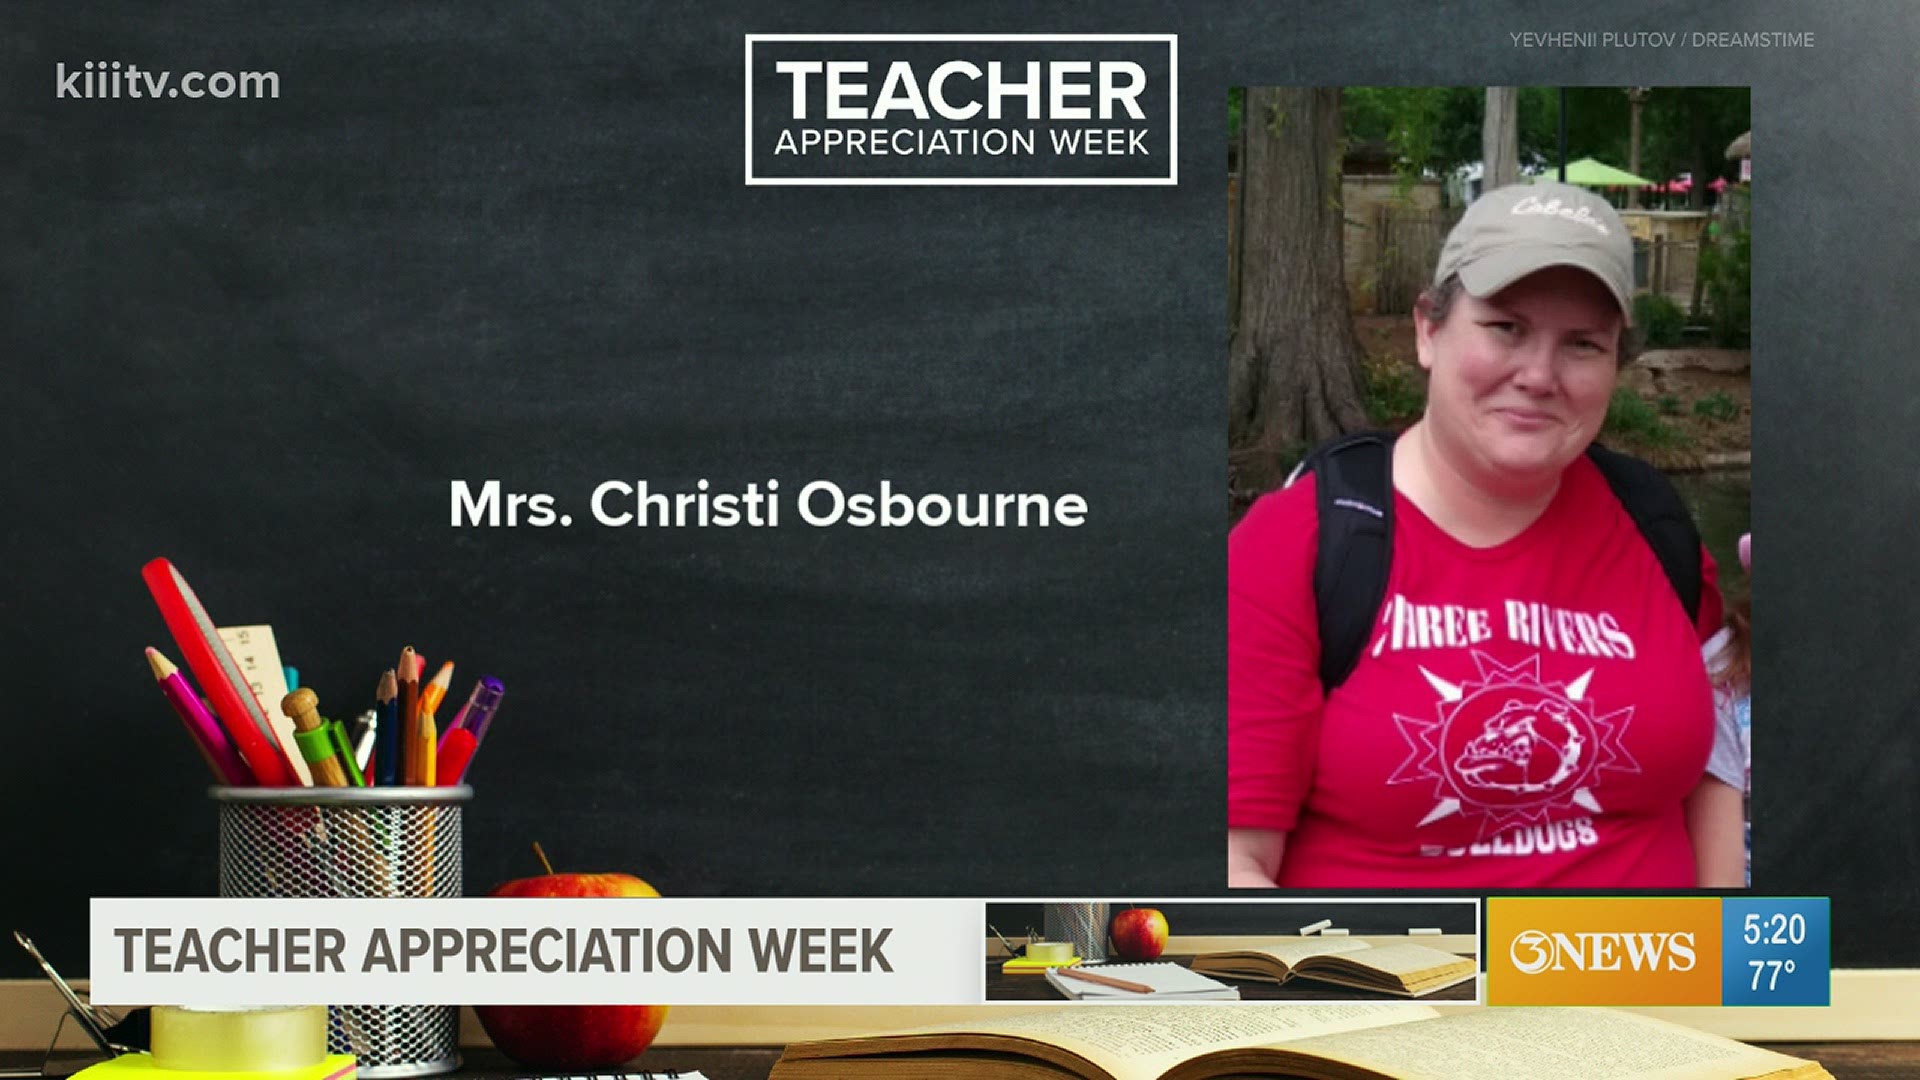 3News will honor teachers all week.